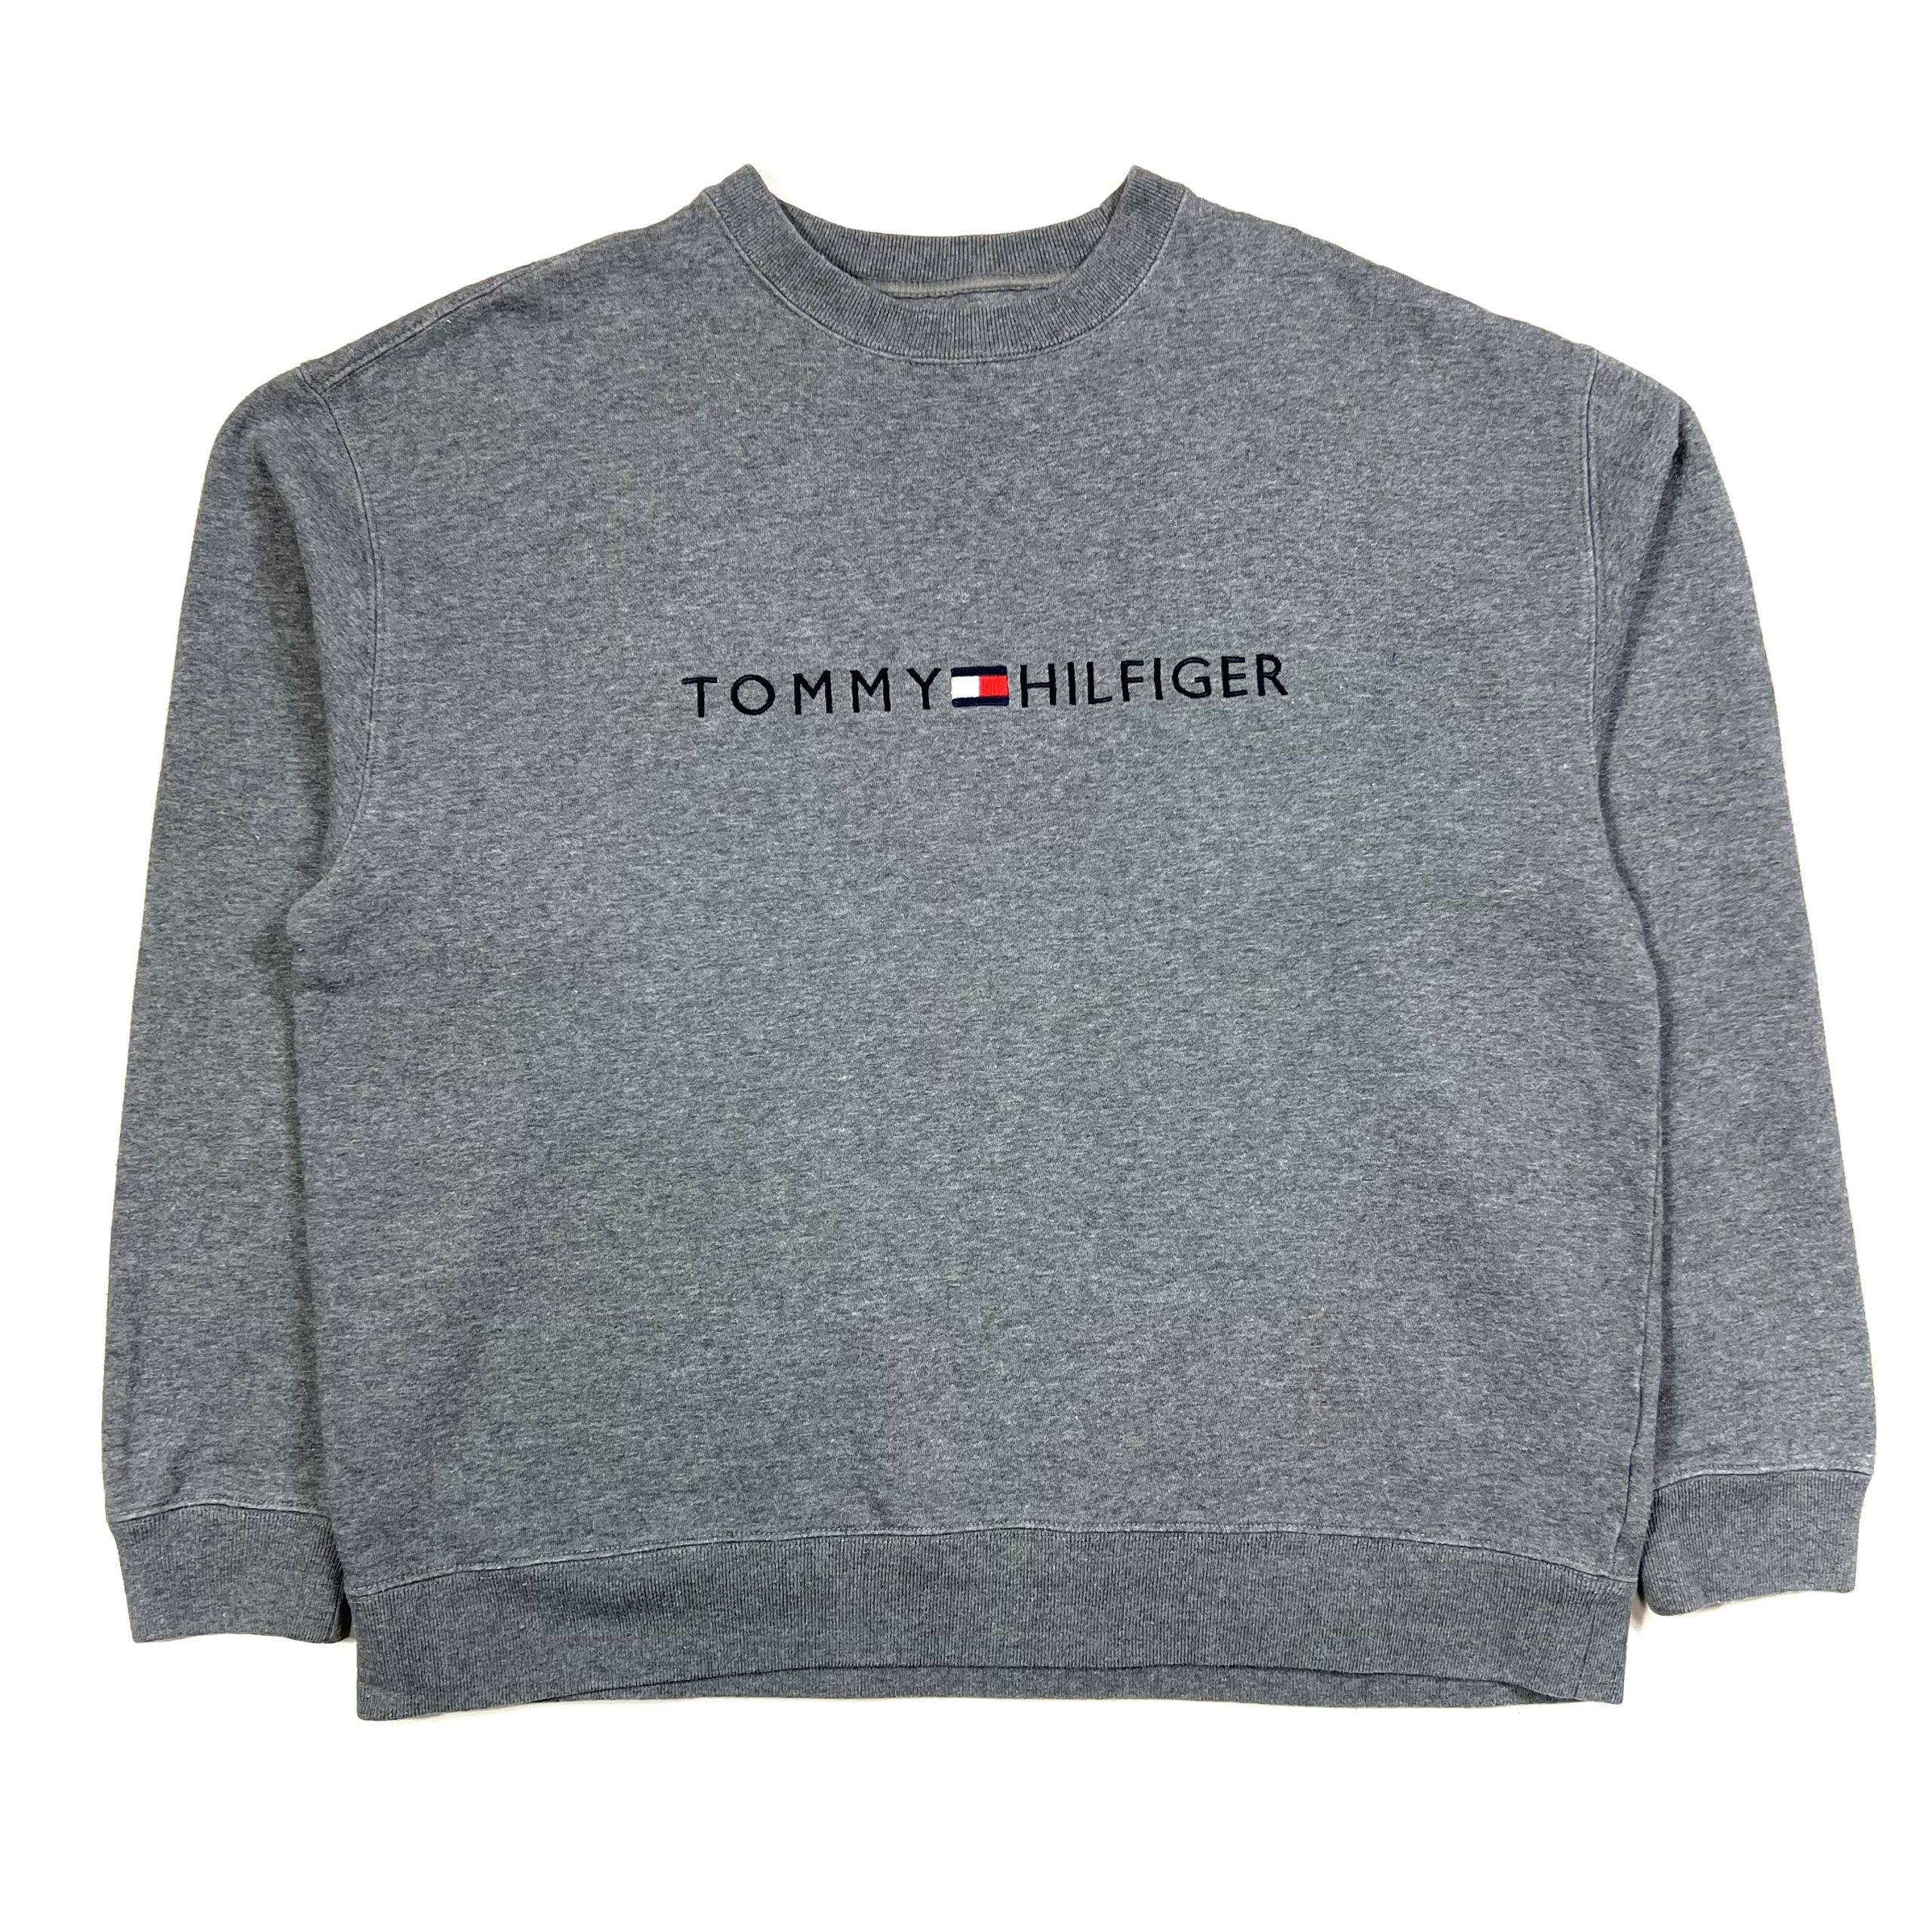 Tommy Hilfiger Spell Out Sweatshirt - Grey - TMC Vintage - Vintage Clothing